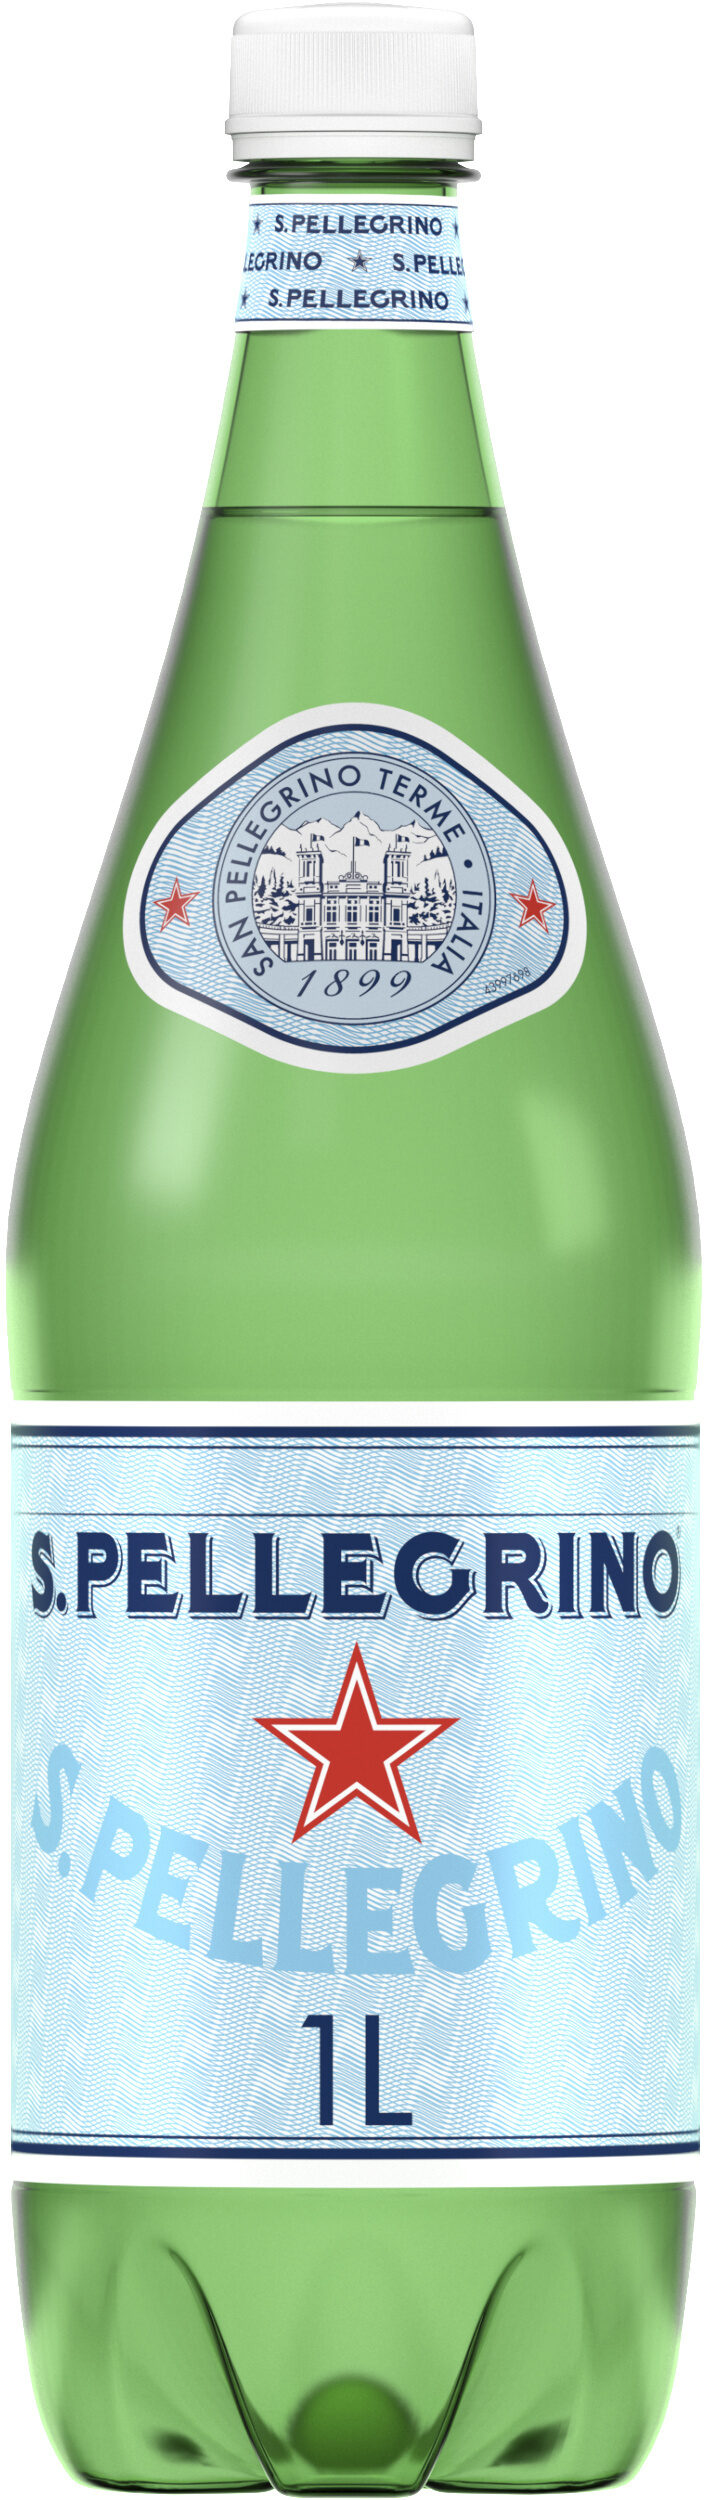 S. Pellegrino Water - Produit